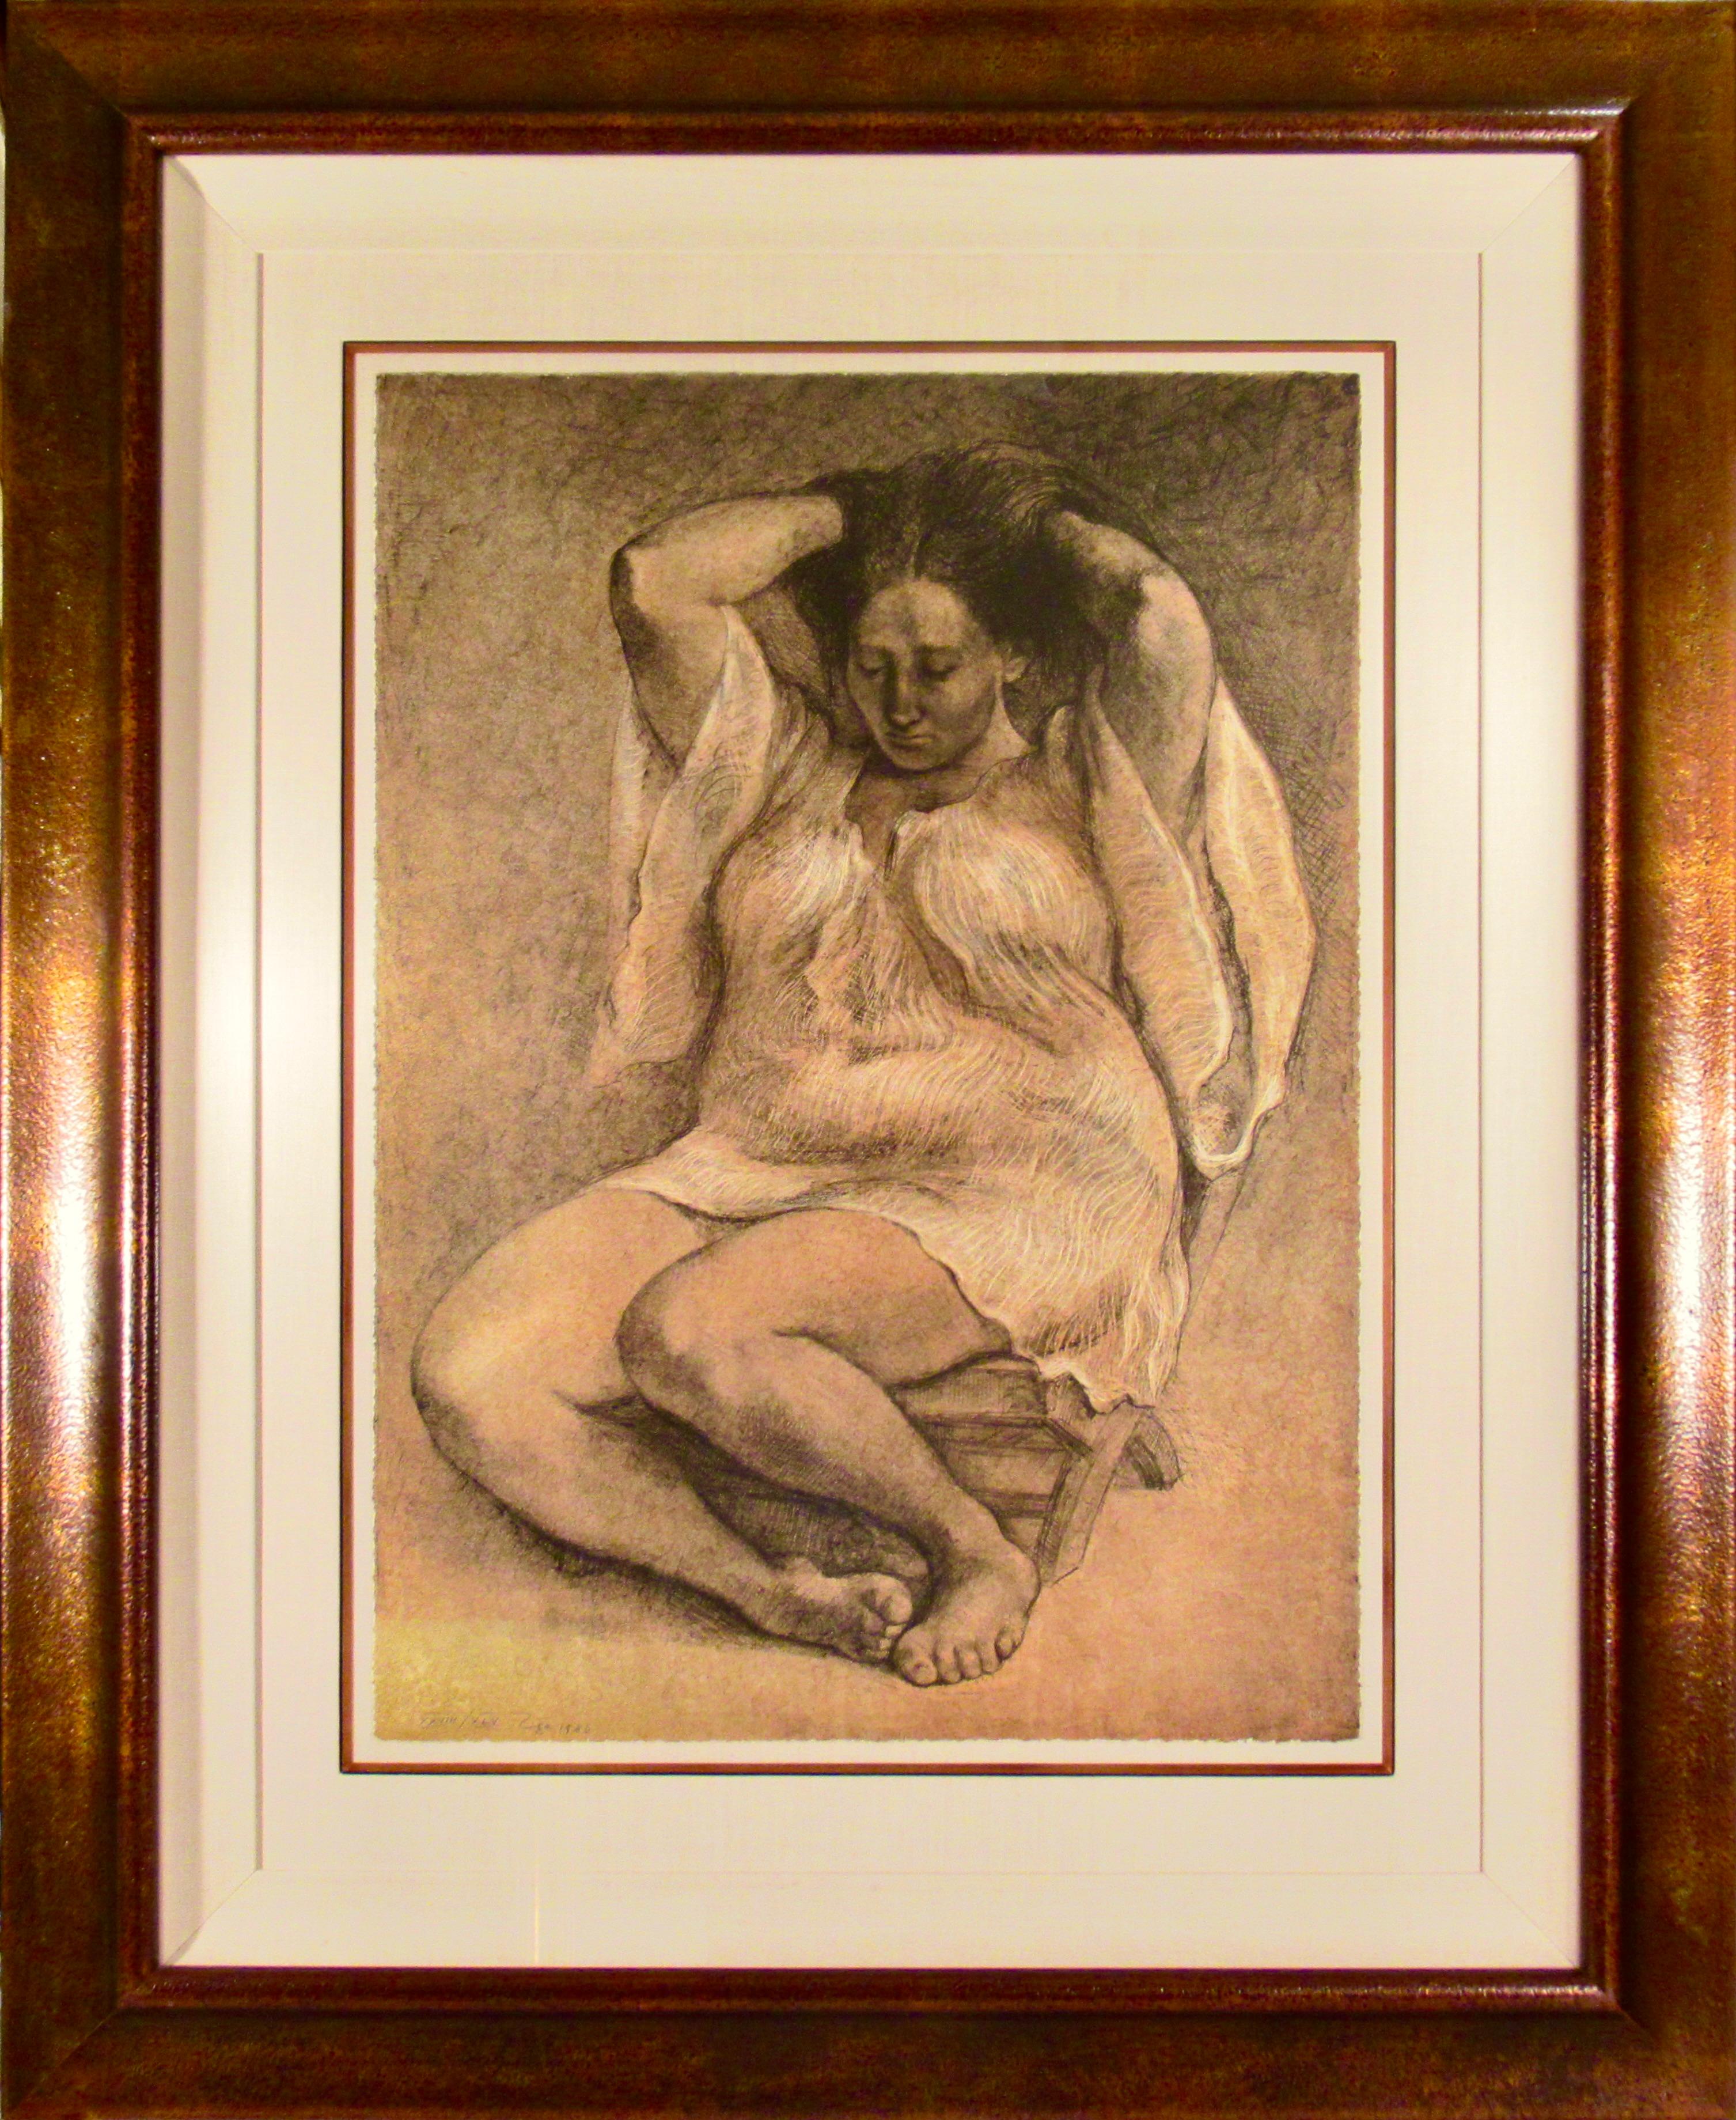 Francisco Zúñiga Figurative Print - "Silvia" Large original color lithograph